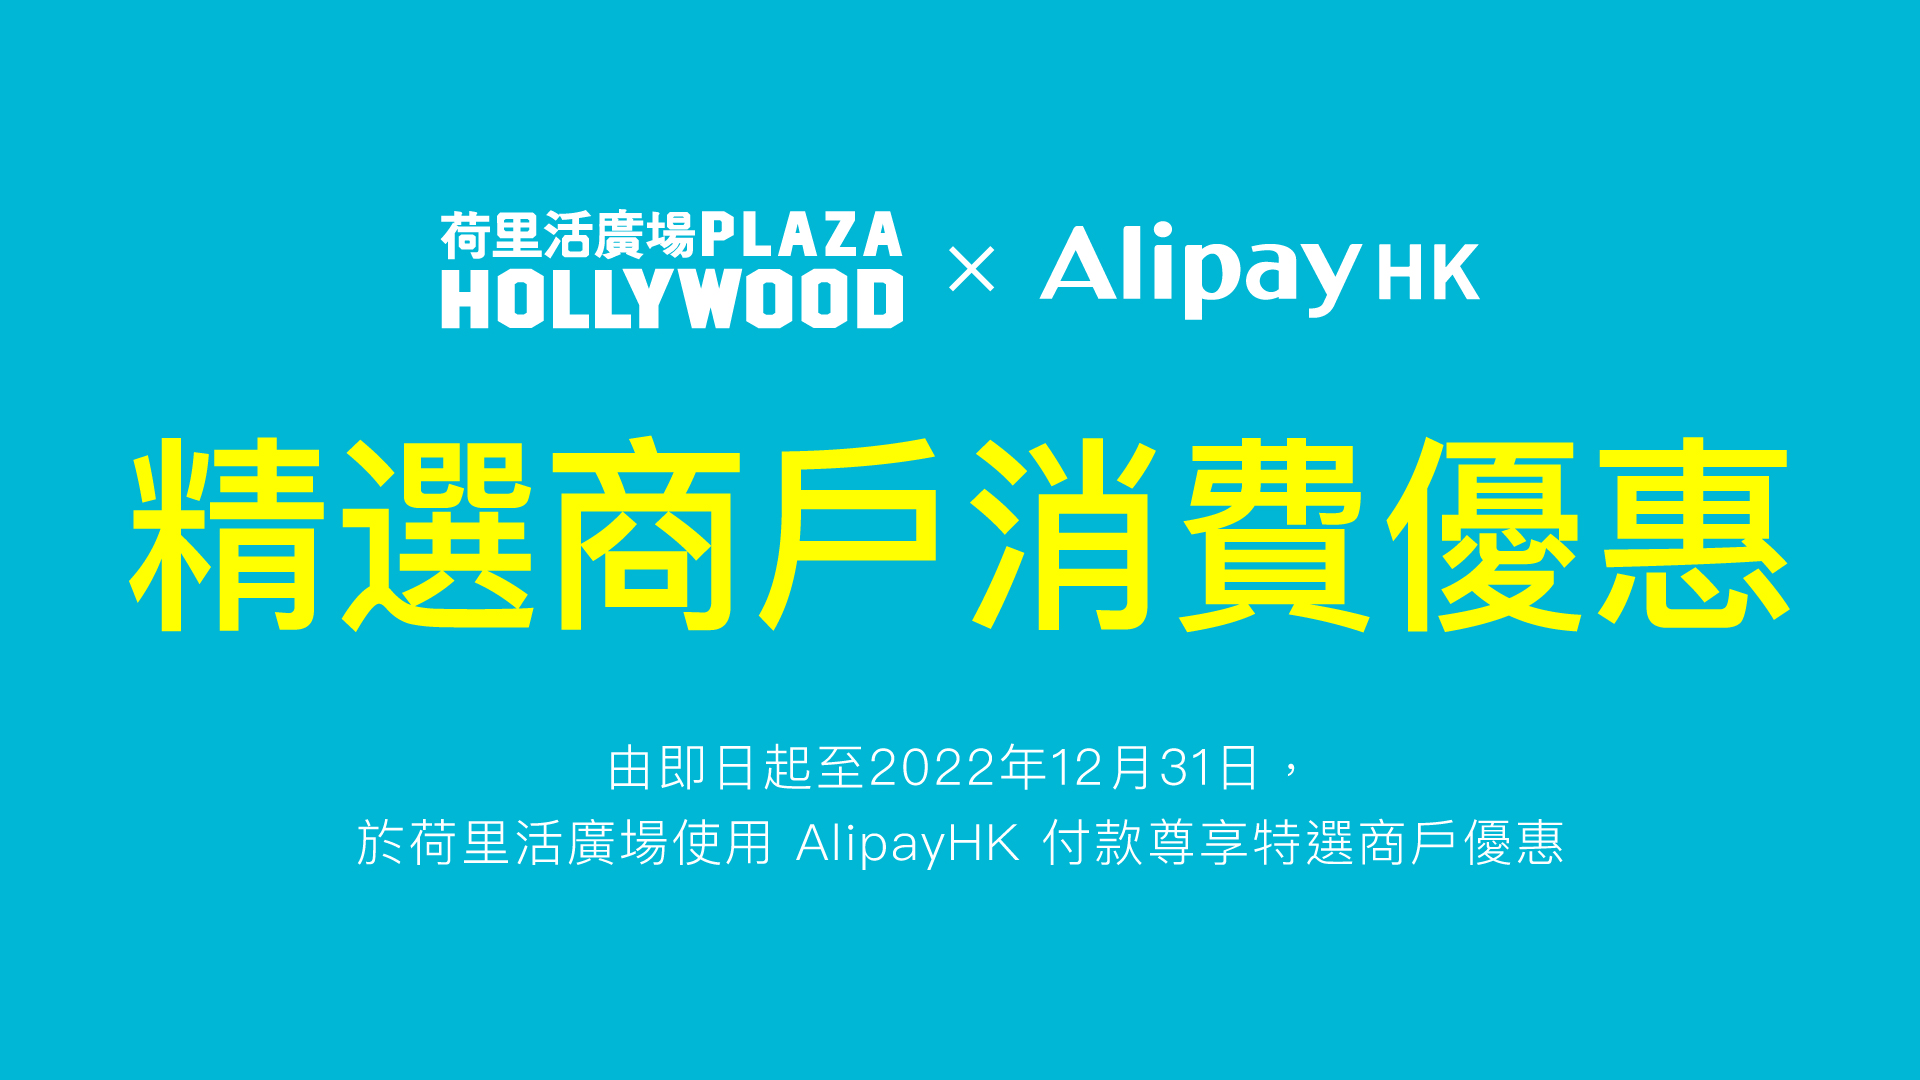 AlipayHK Shopping Privileges Promotion